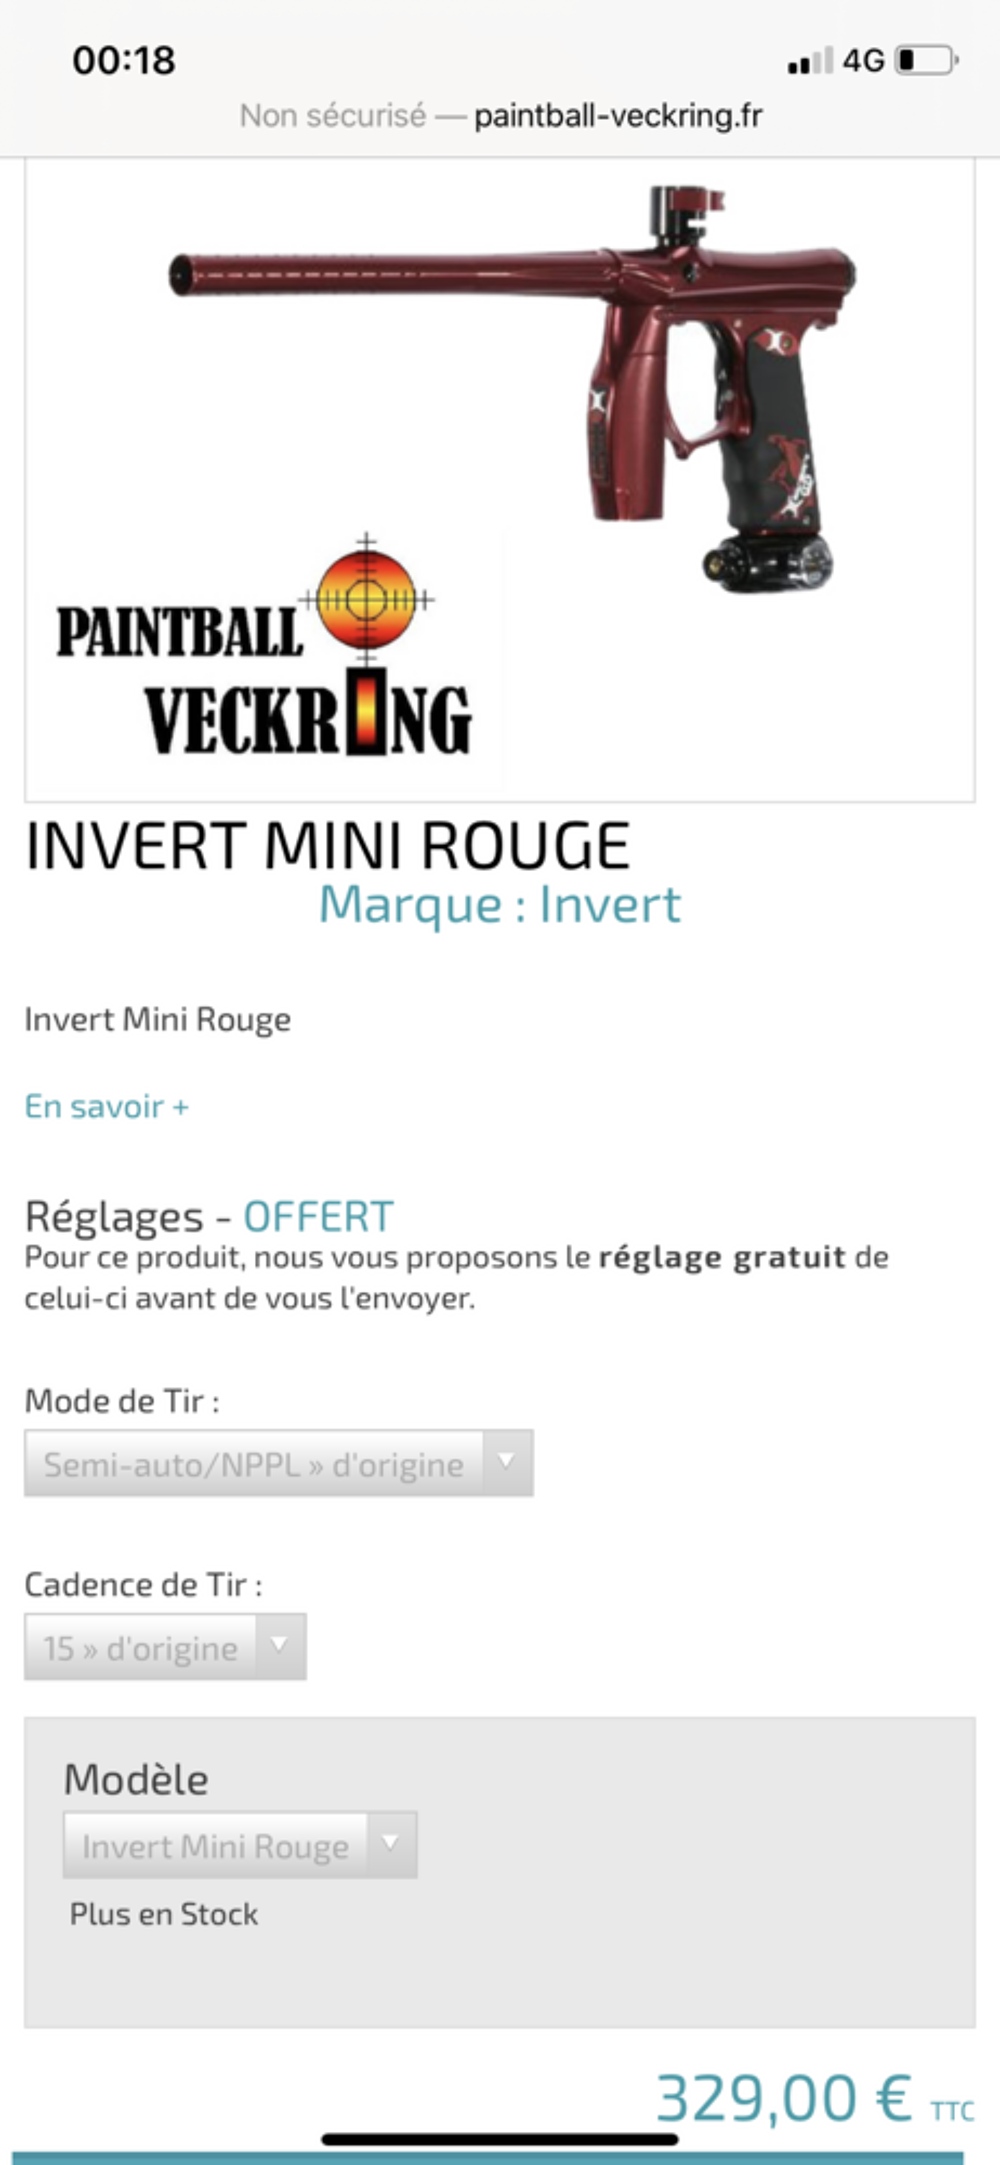 Invert mini rouge
Sports